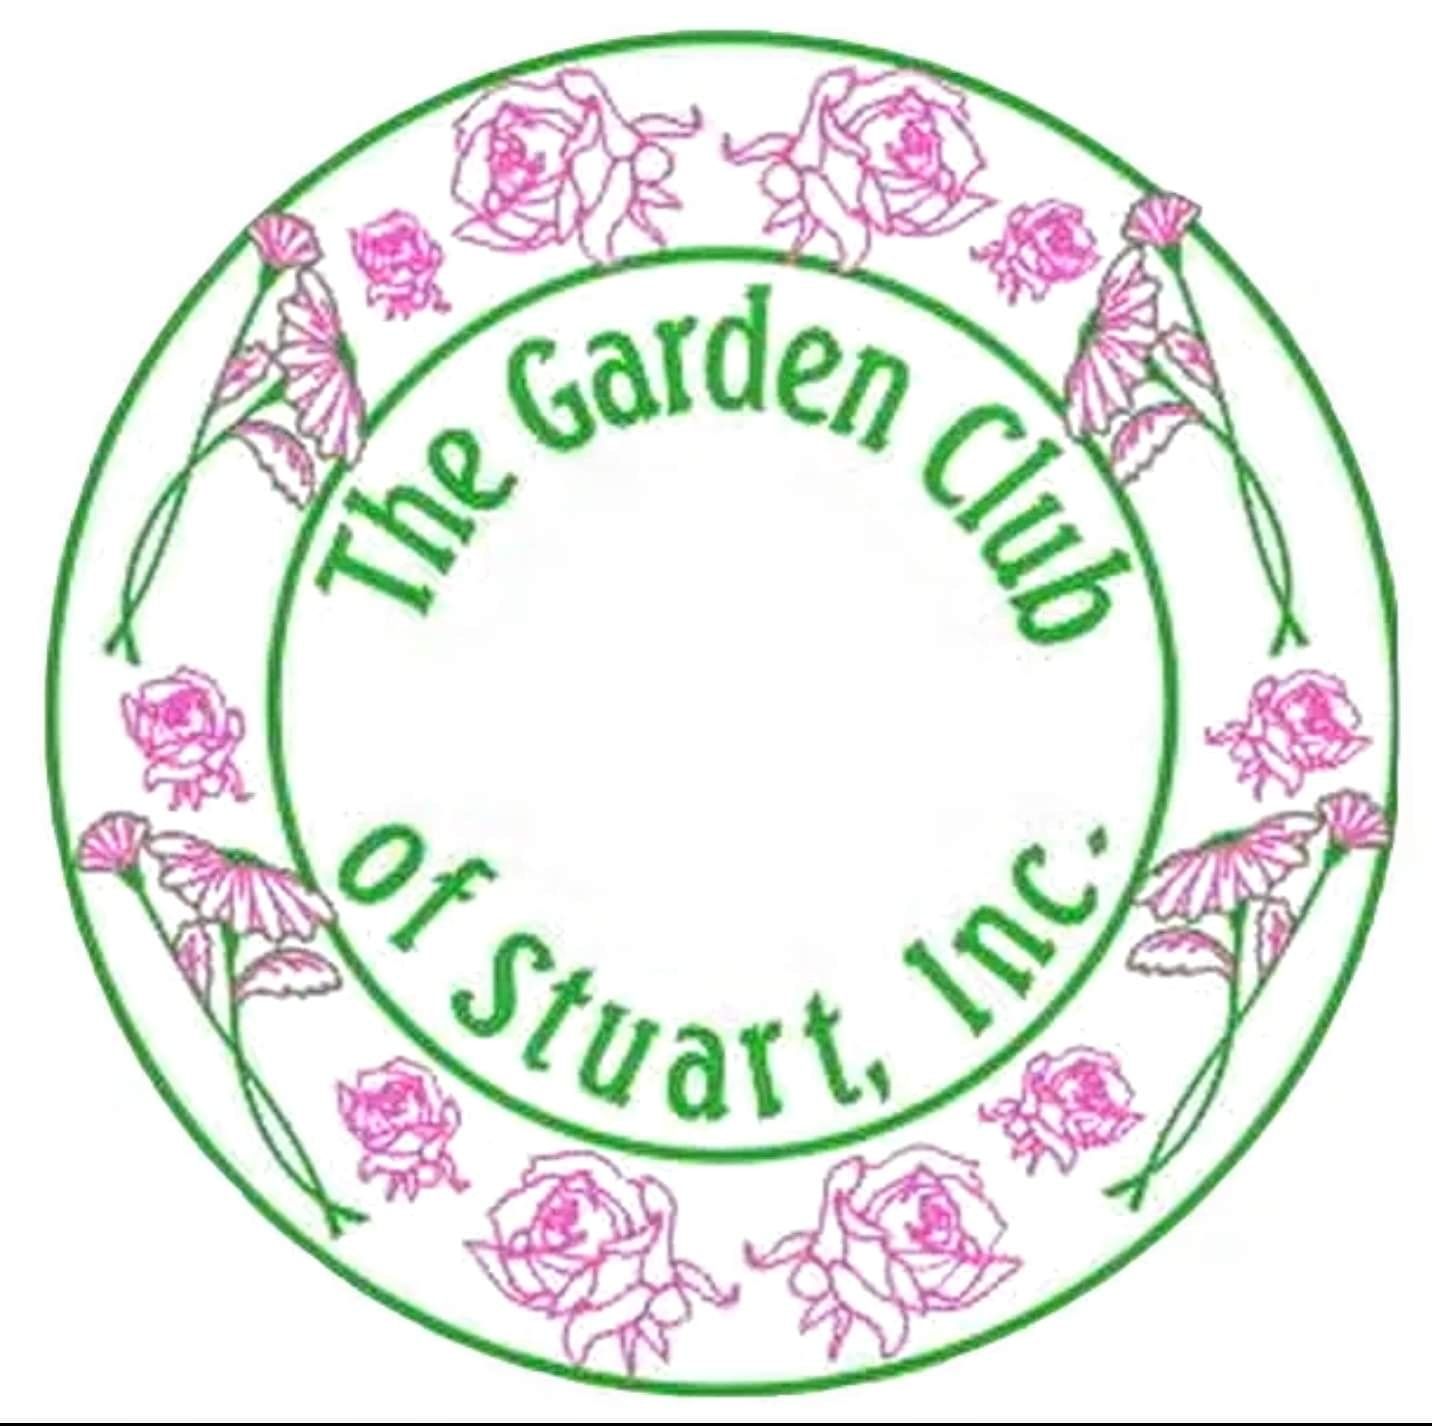 Garden Club of Stuart